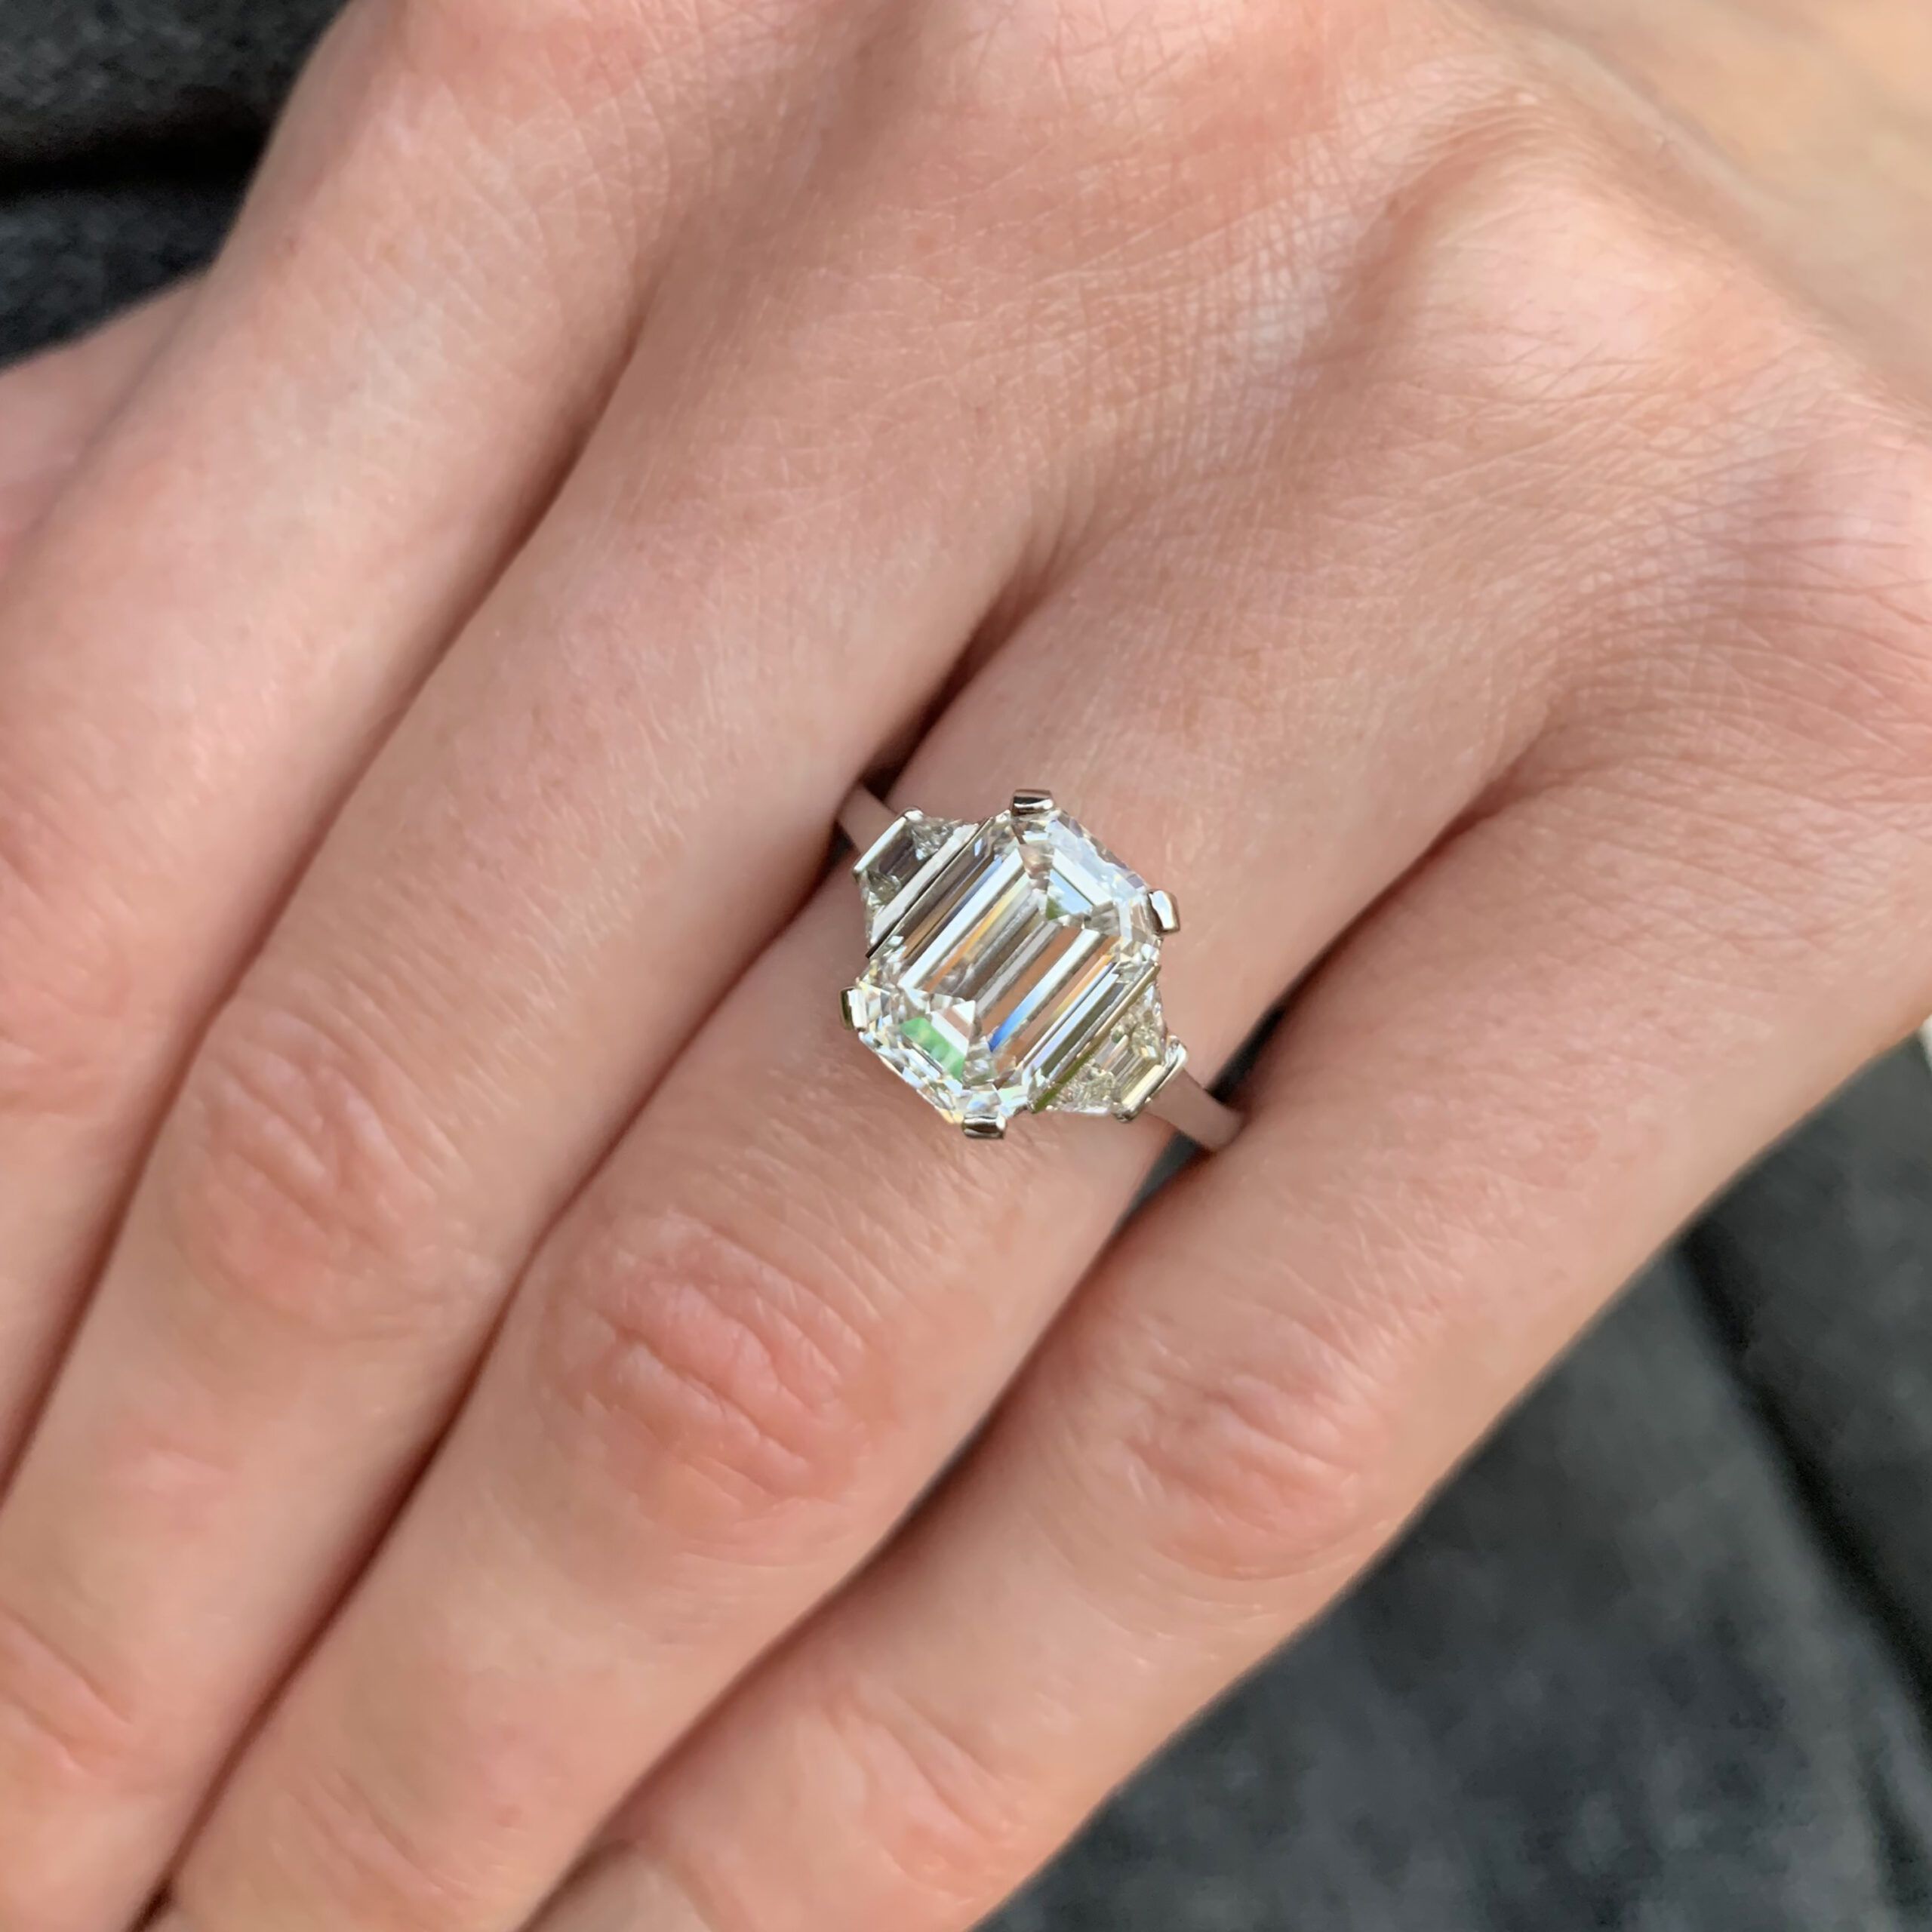 rc113 5 ronan campbell platinum emerald cut trapezoid diamond engagement ring designyard scaled 26d3ced6